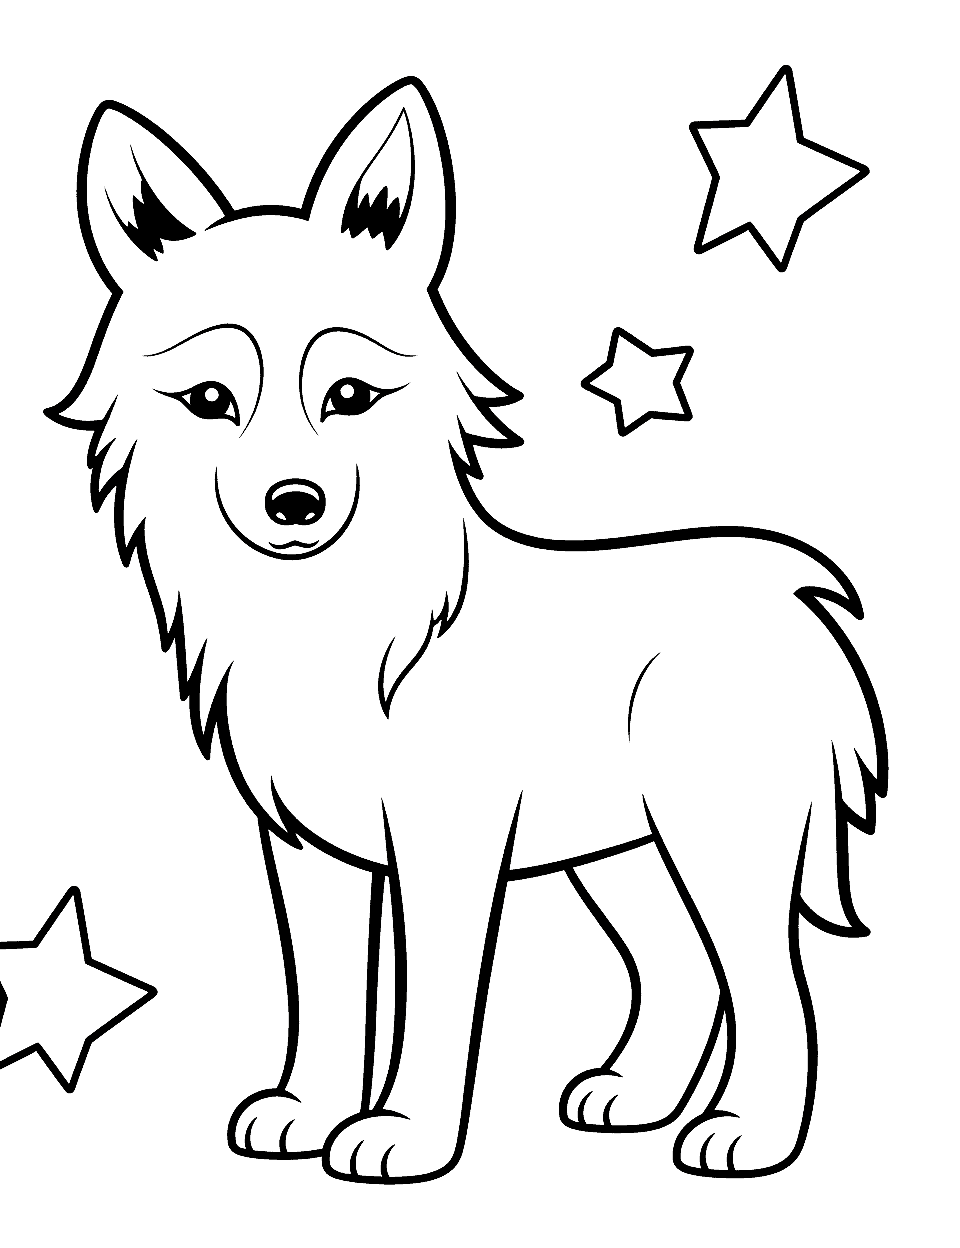 Kawaii Wolf Coloring Page - A kawaii wolf standing looking cute.